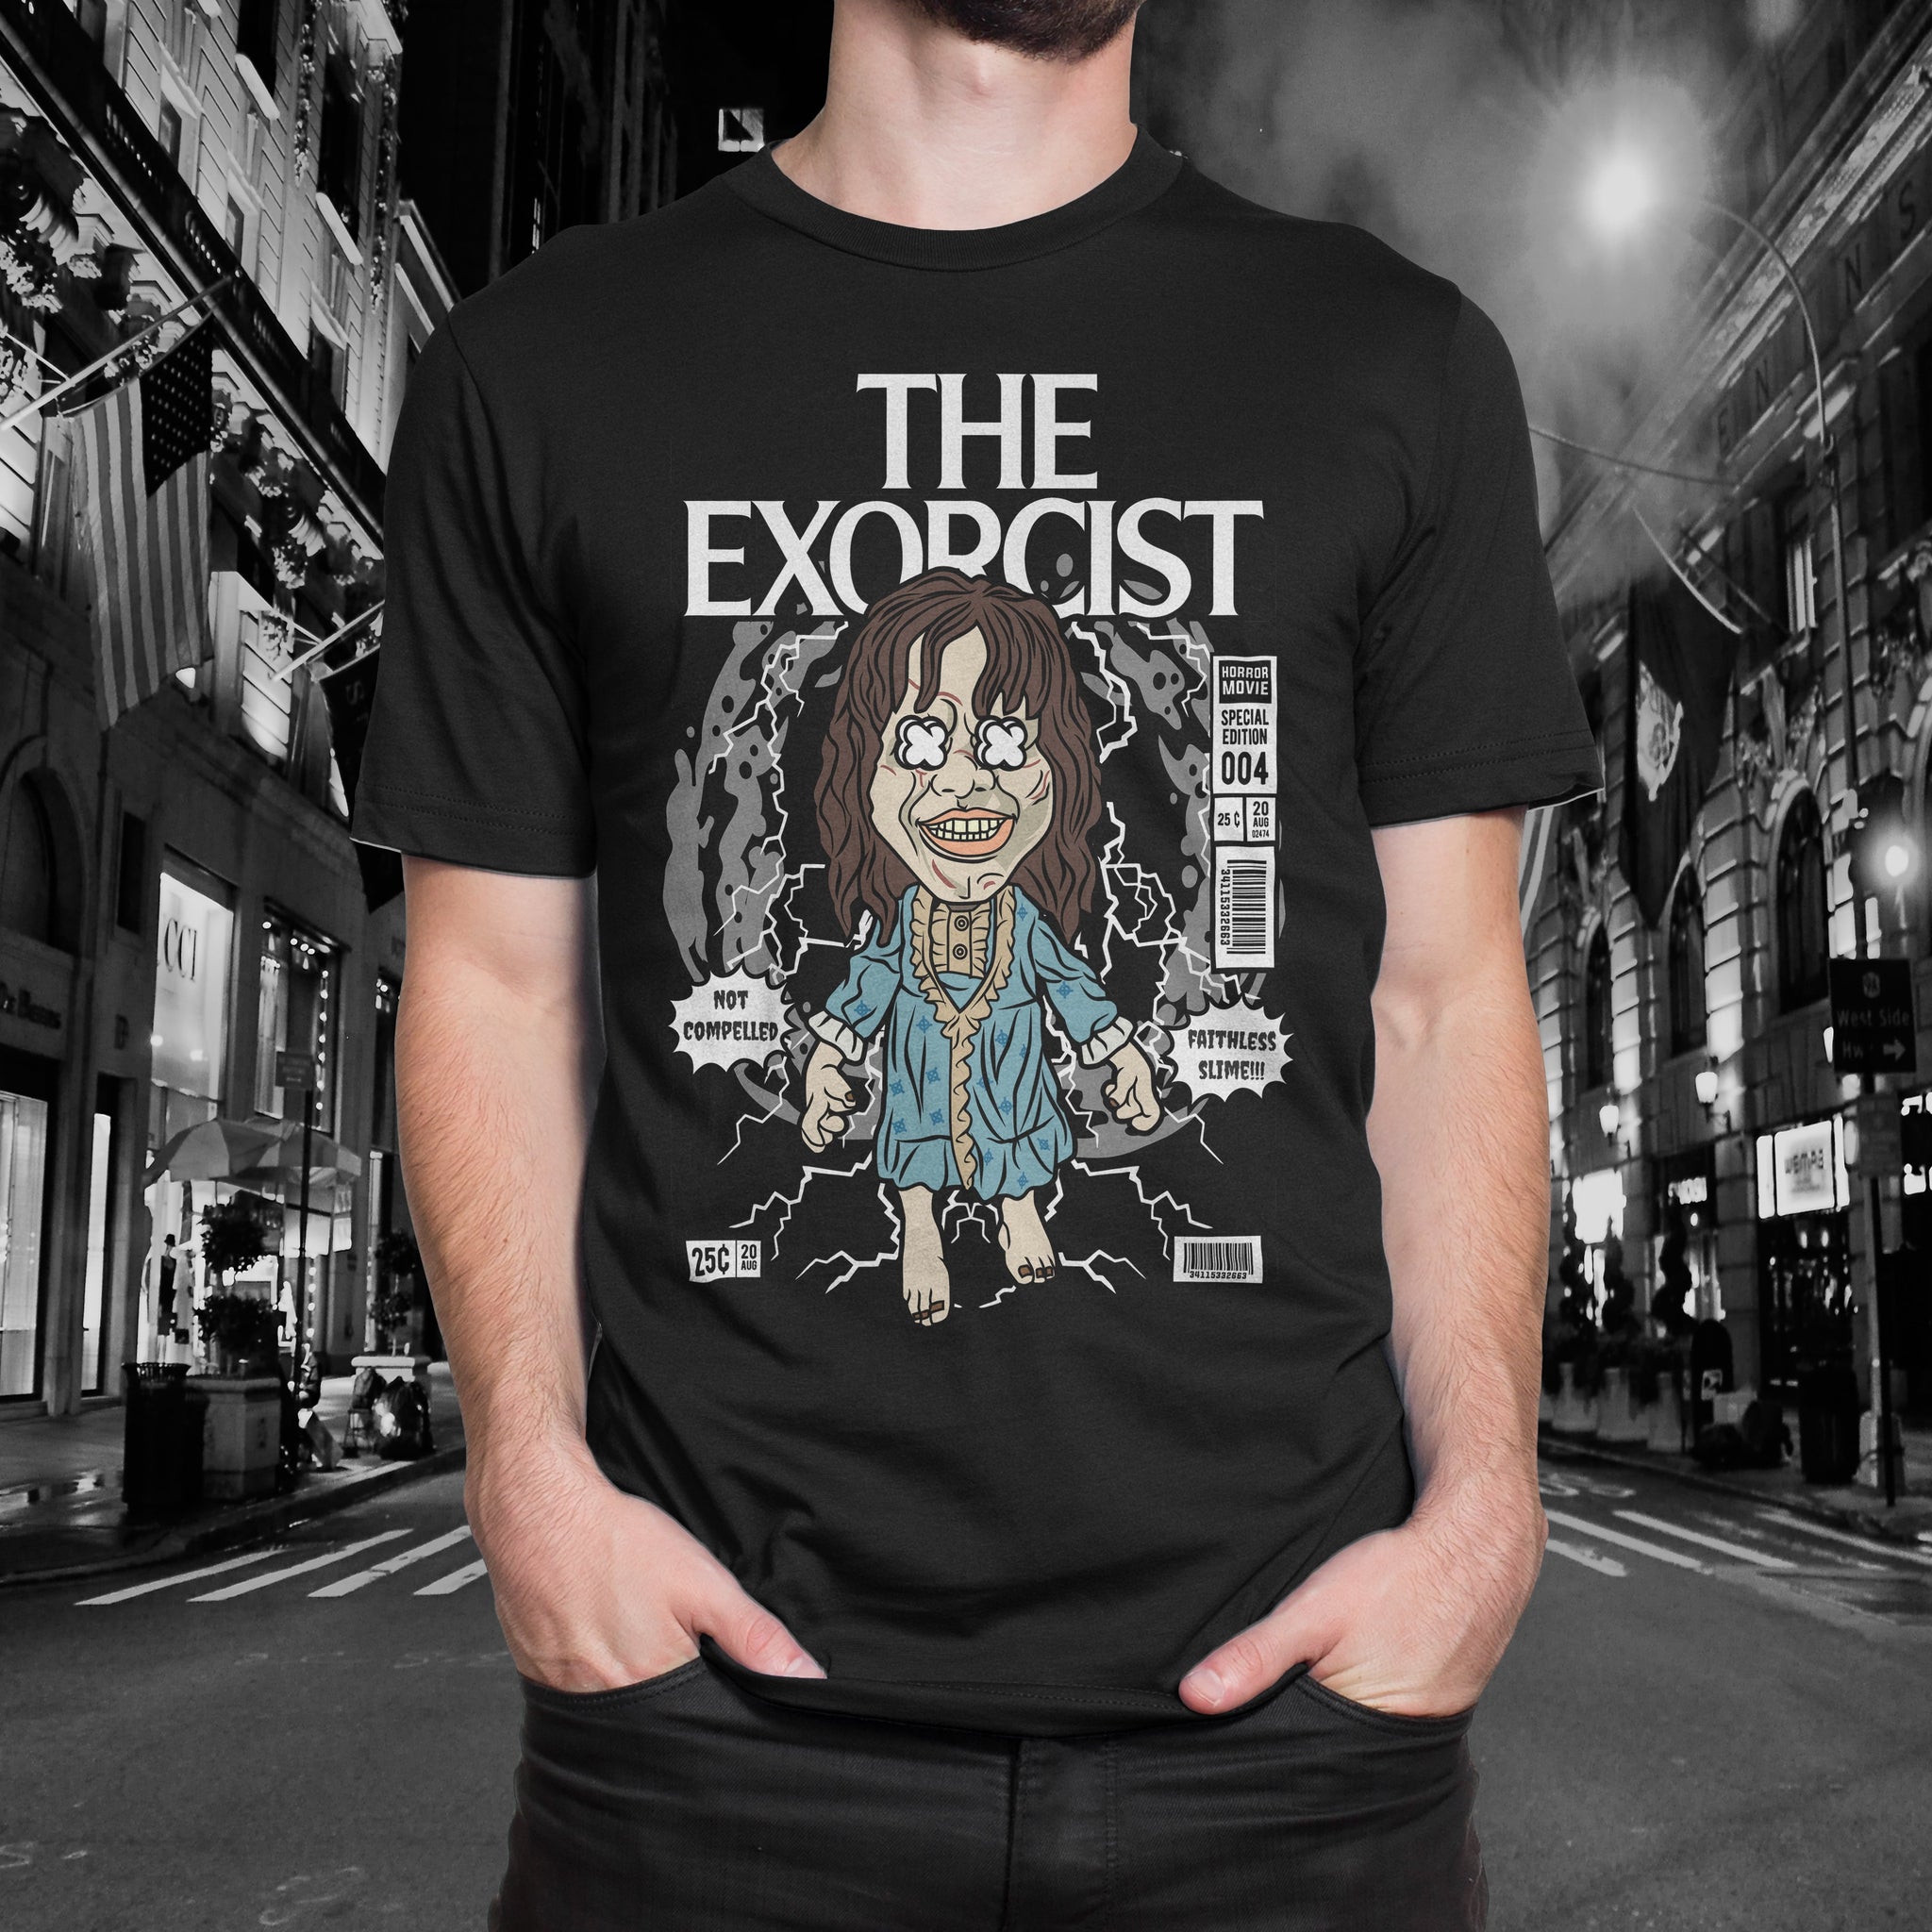 The Exorcist "Comic" Tee